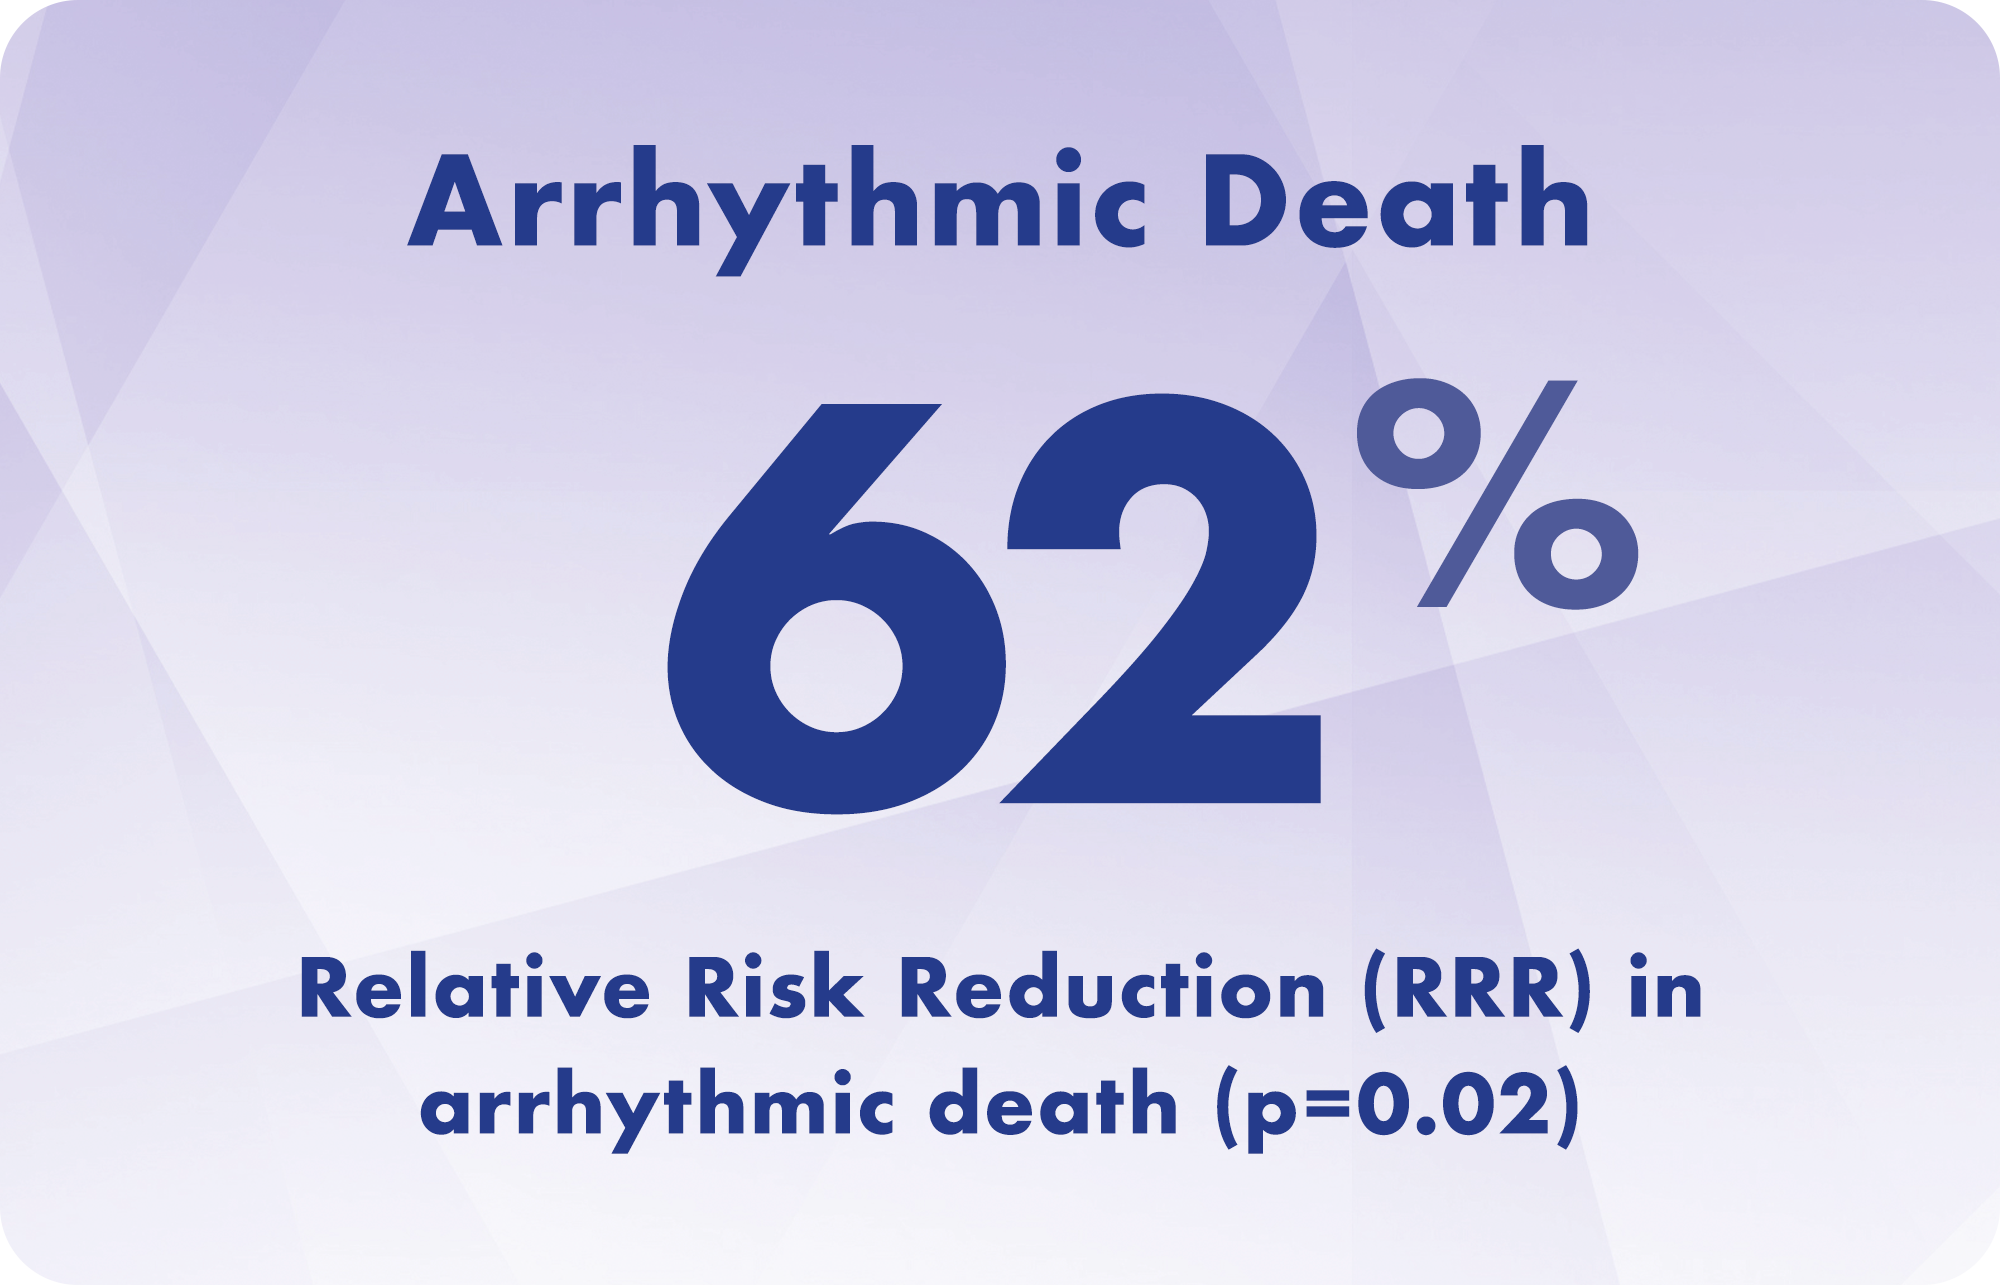 Statistic - Arrythmitic Death, 62% relative risk reduction in arrhythmic death